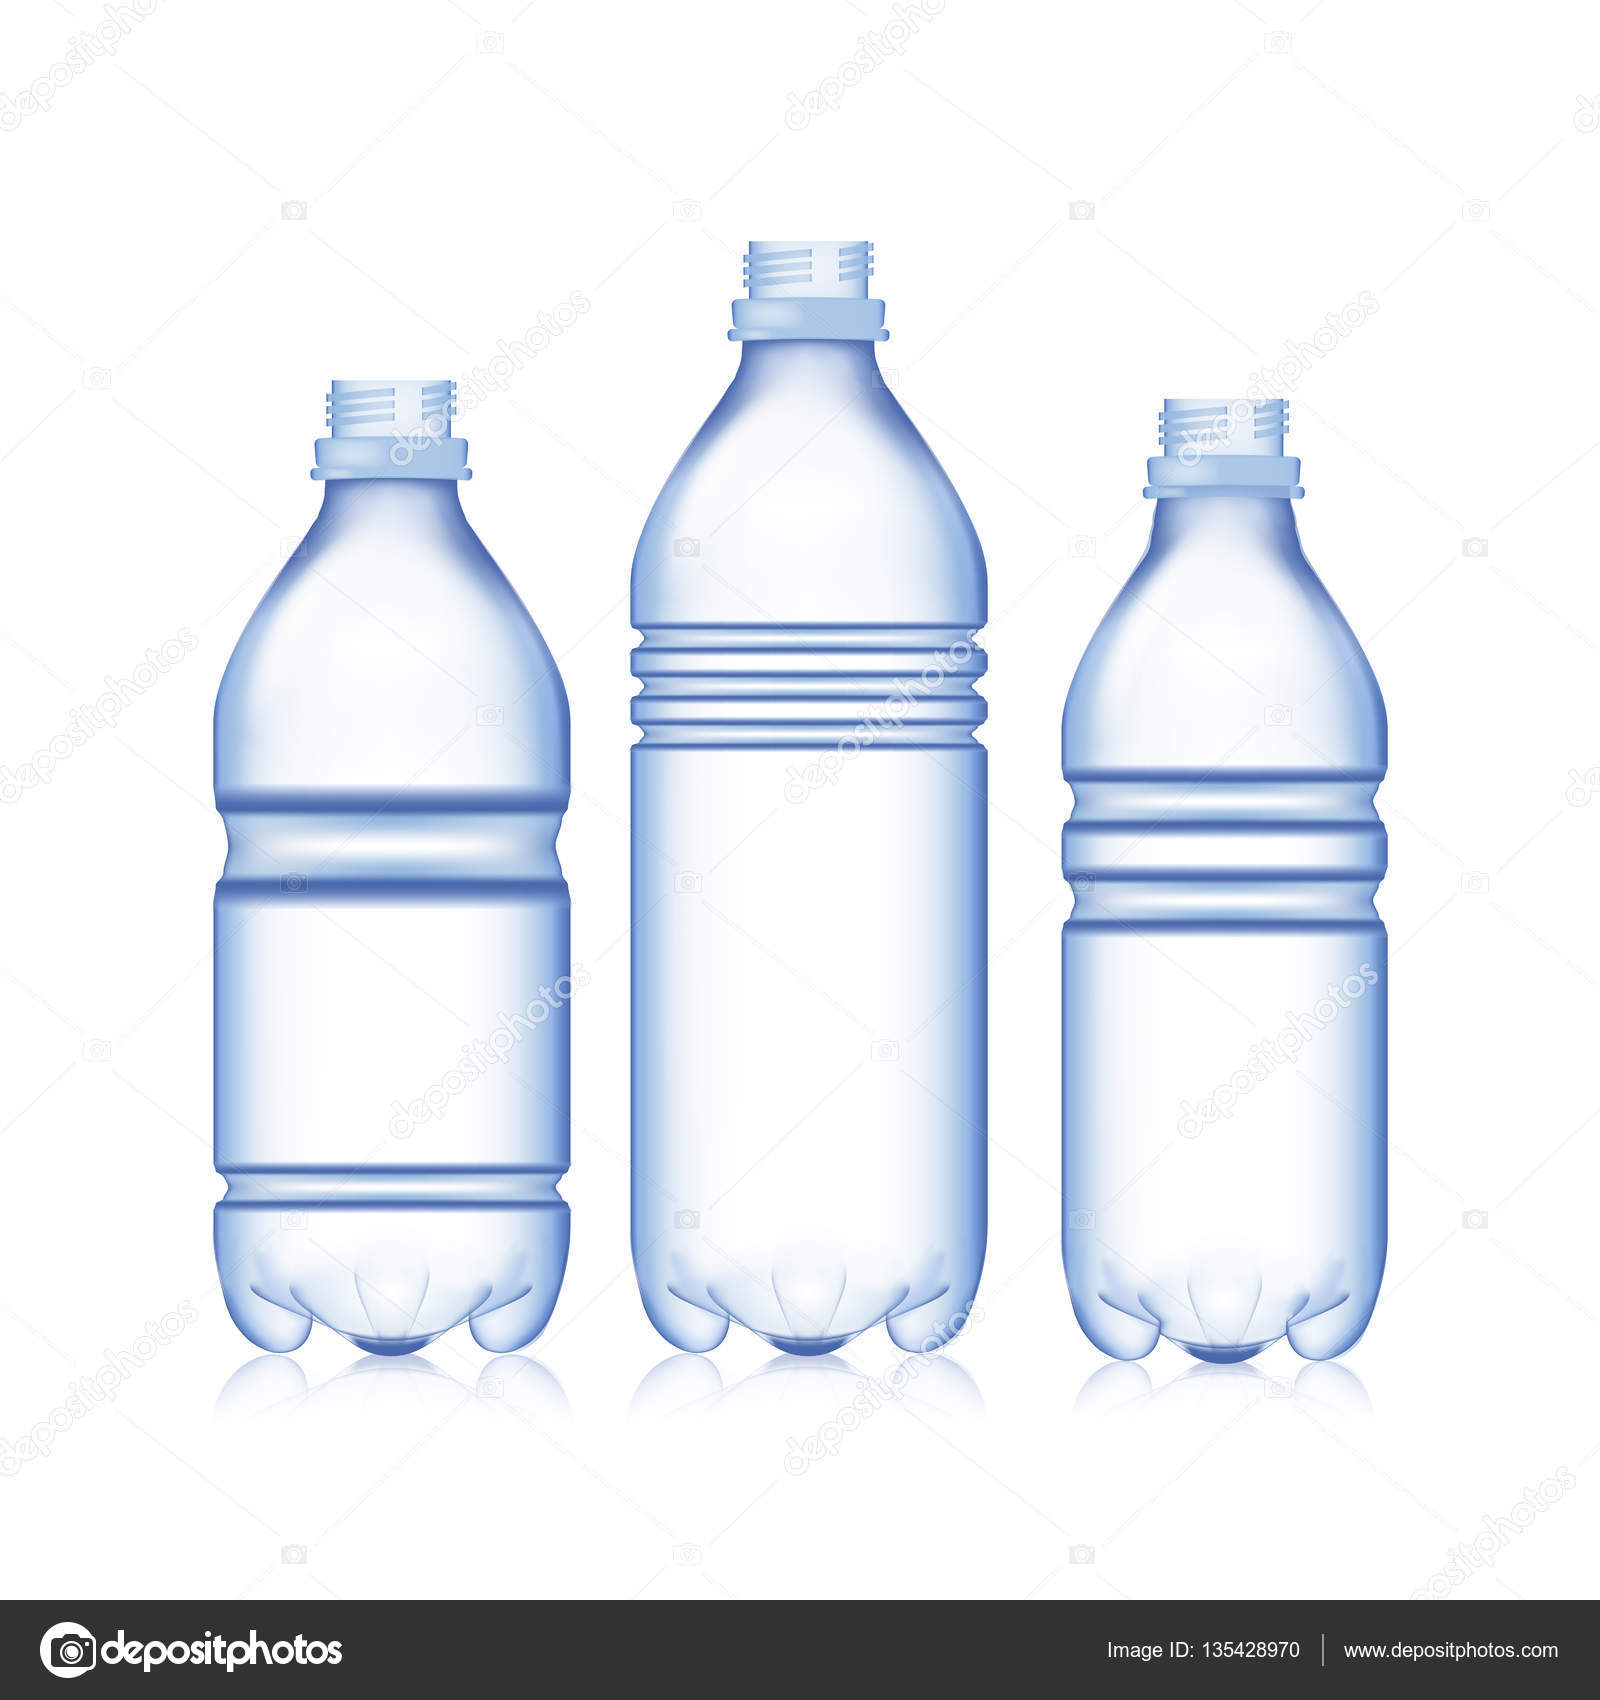 https://st3.depositphotos.com/4111759/13542/v/1600/depositphotos_135428970-stock-illustration-empty-bottle-set-realistic-blank.jpg